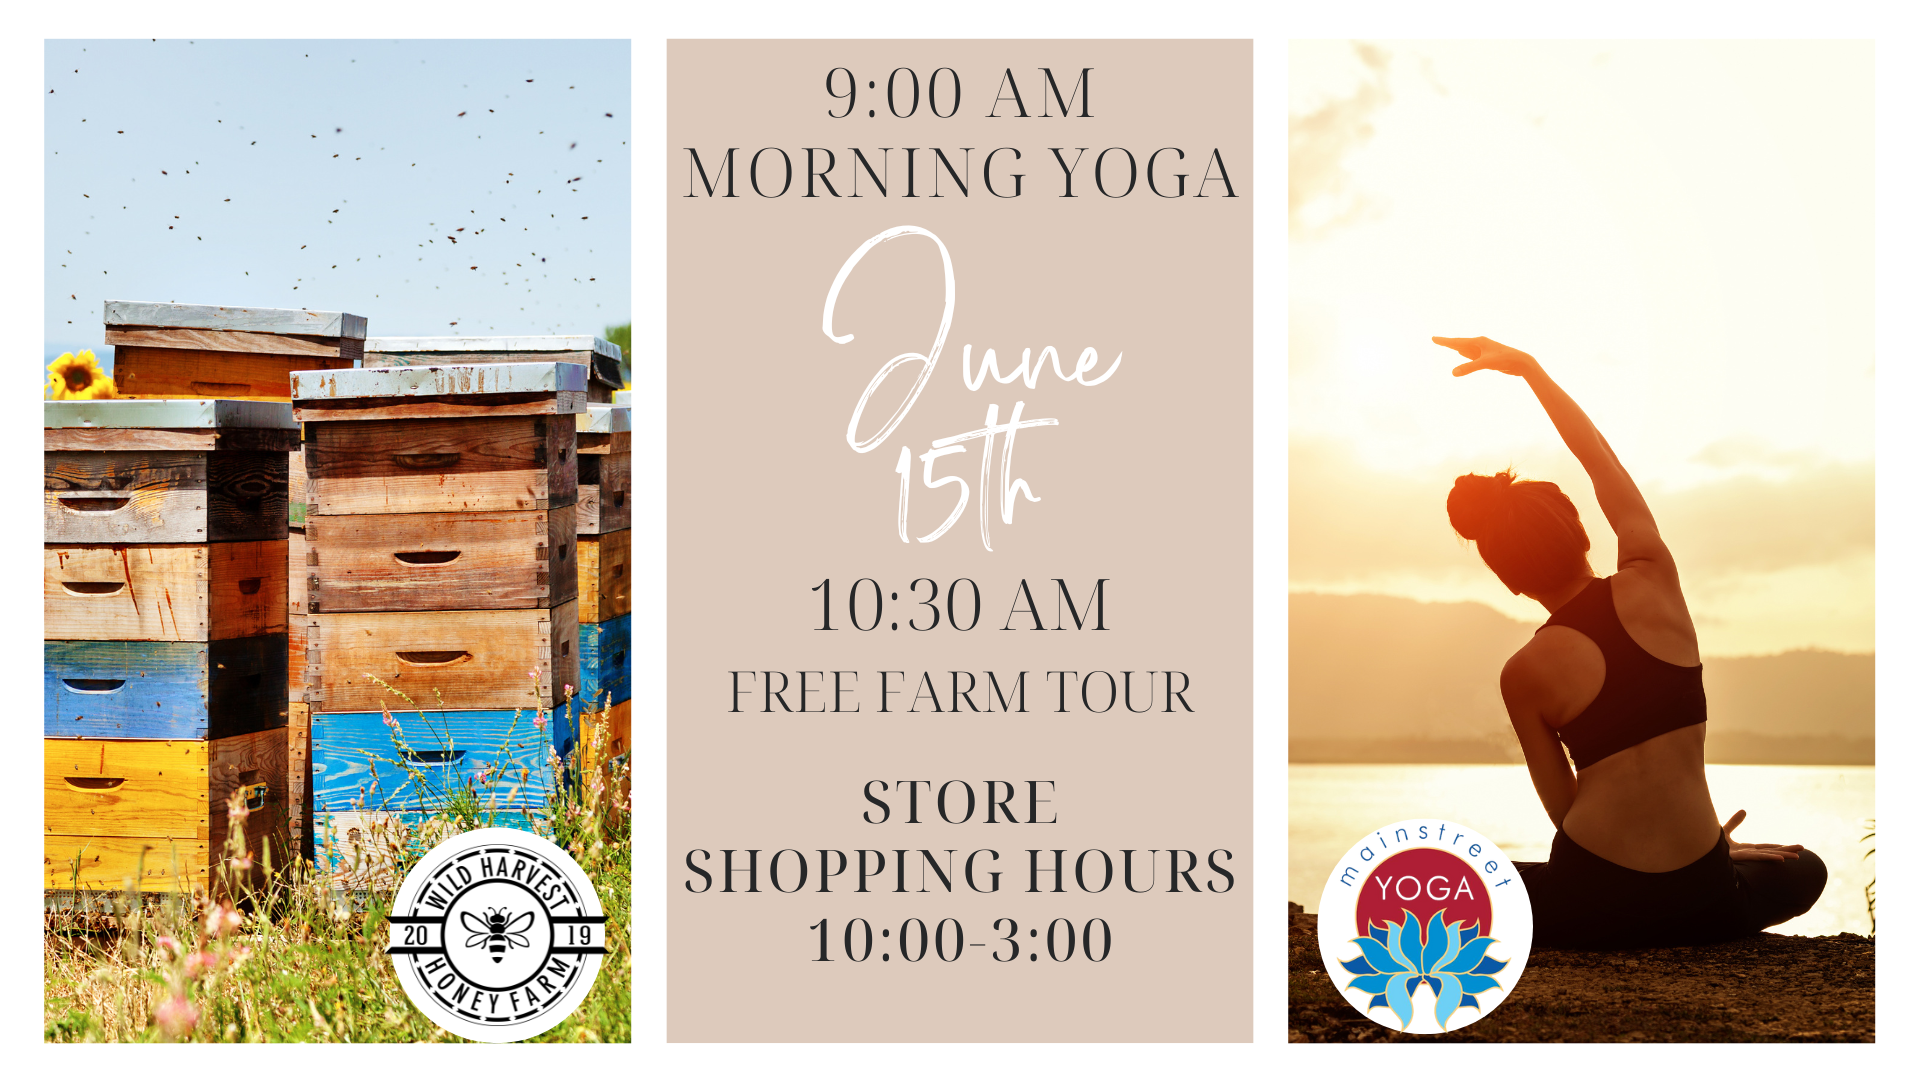 Beatiful Moning Yoga, shopping, and a free farm tour